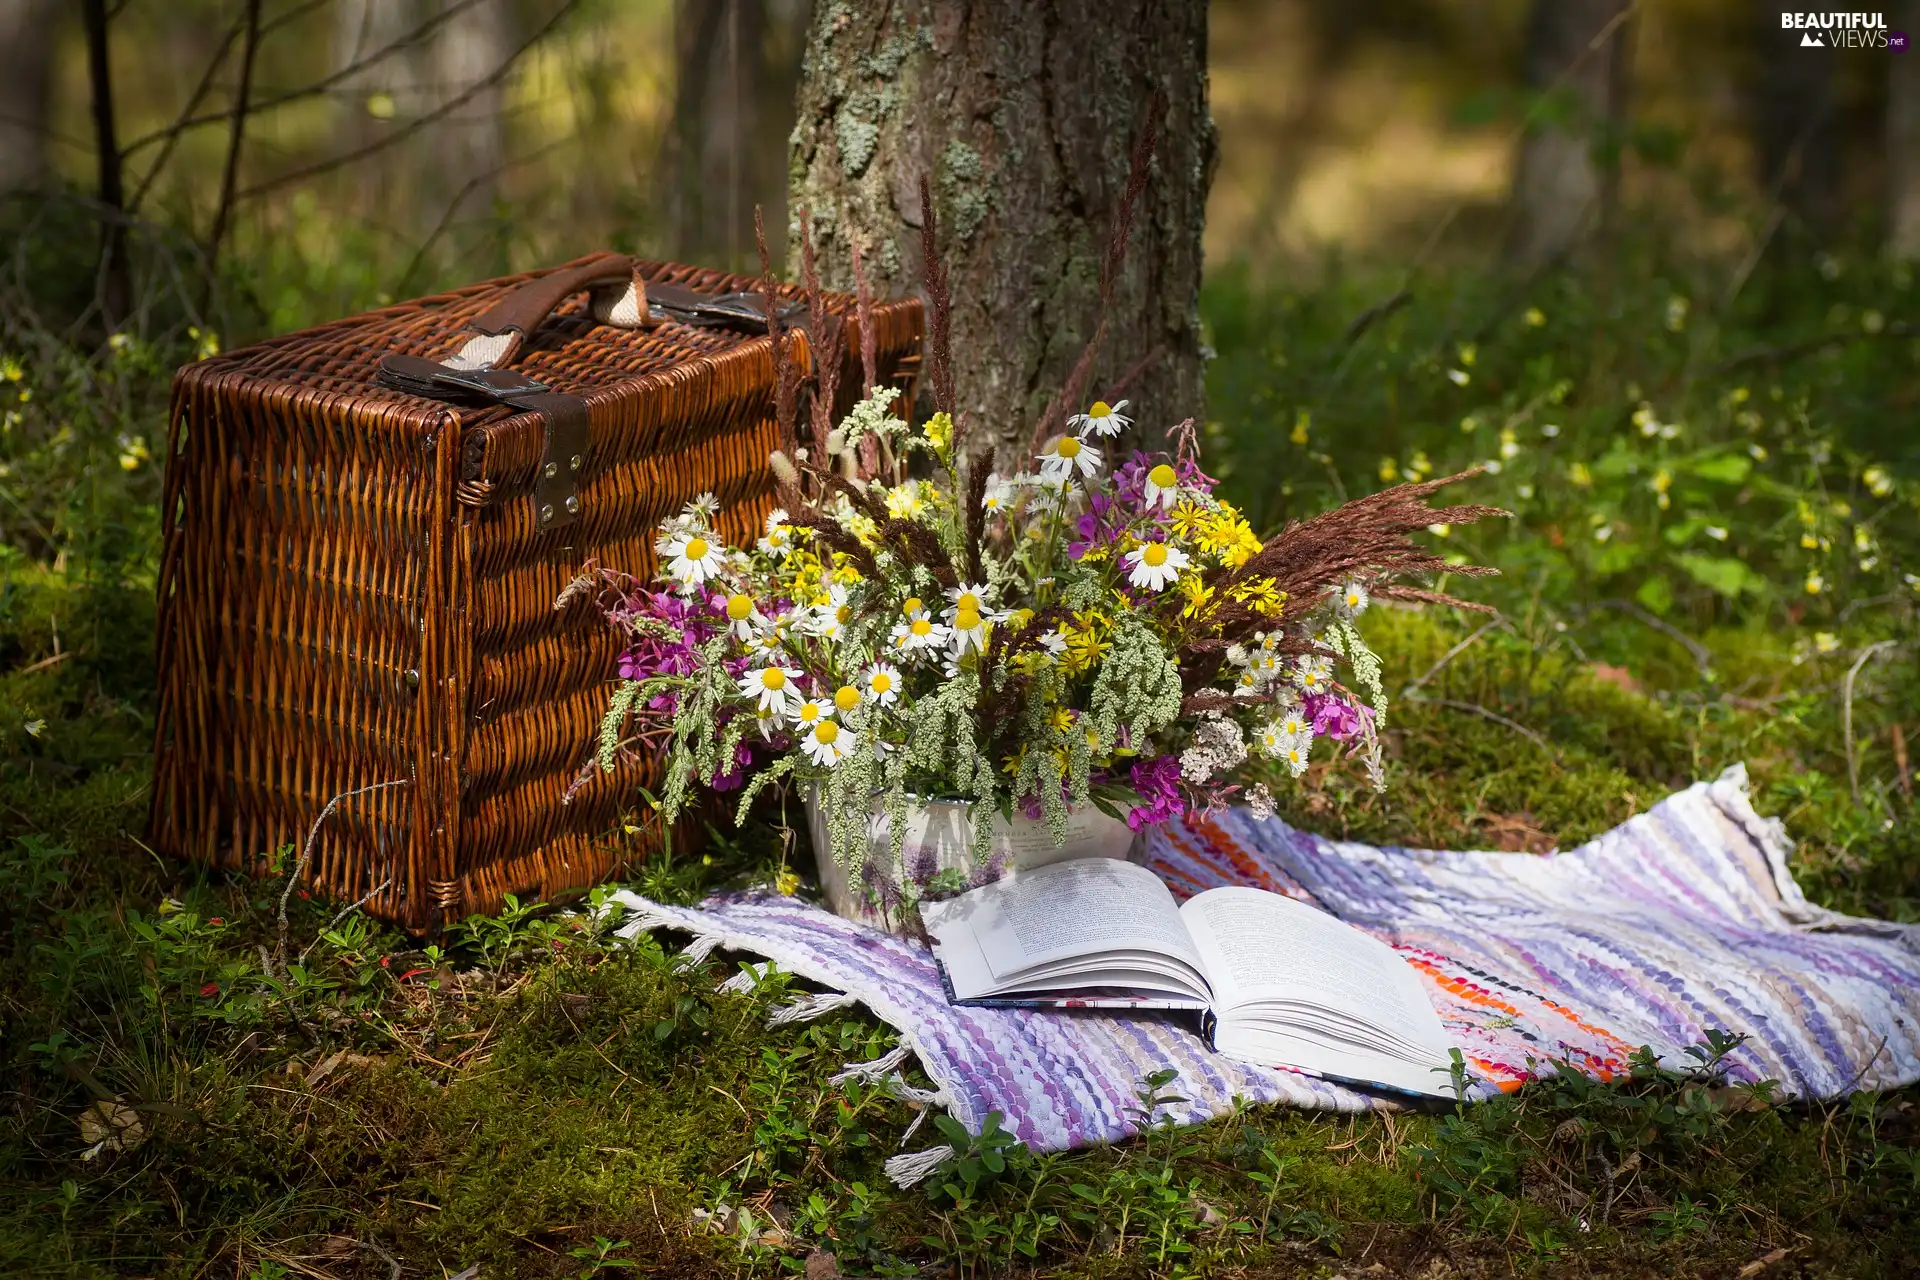 Wildflowers, Flowers, picnic, Book, wicker, bouquet, trees, basket